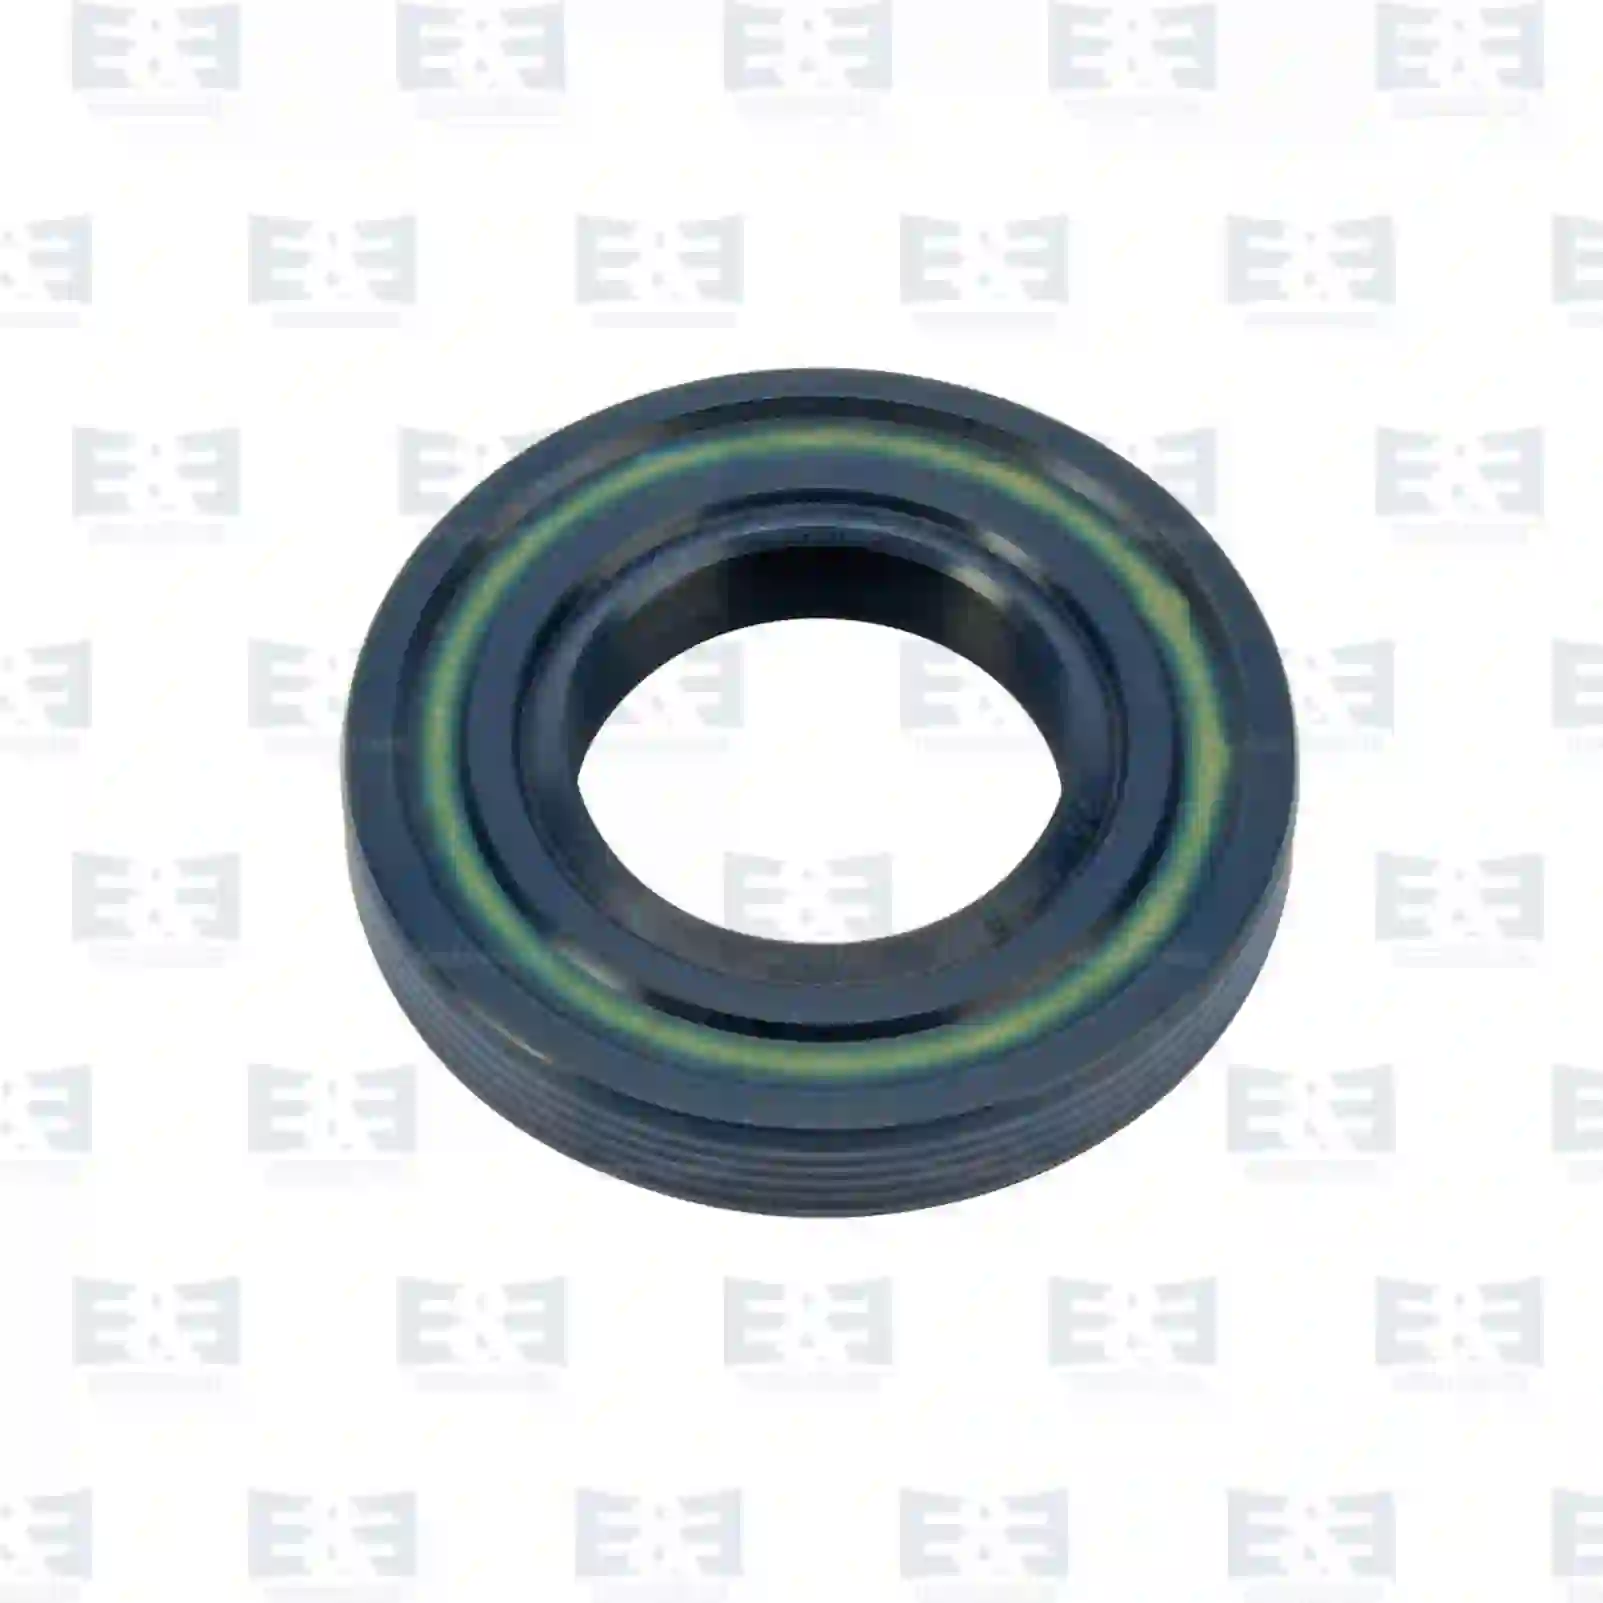 Release Lever Oil seal, EE No 2E2288822 ,  oem no:1526215, 6882680, ZG02636-0008 E&E Truck Spare Parts | Truck Spare Parts, Auotomotive Spare Parts